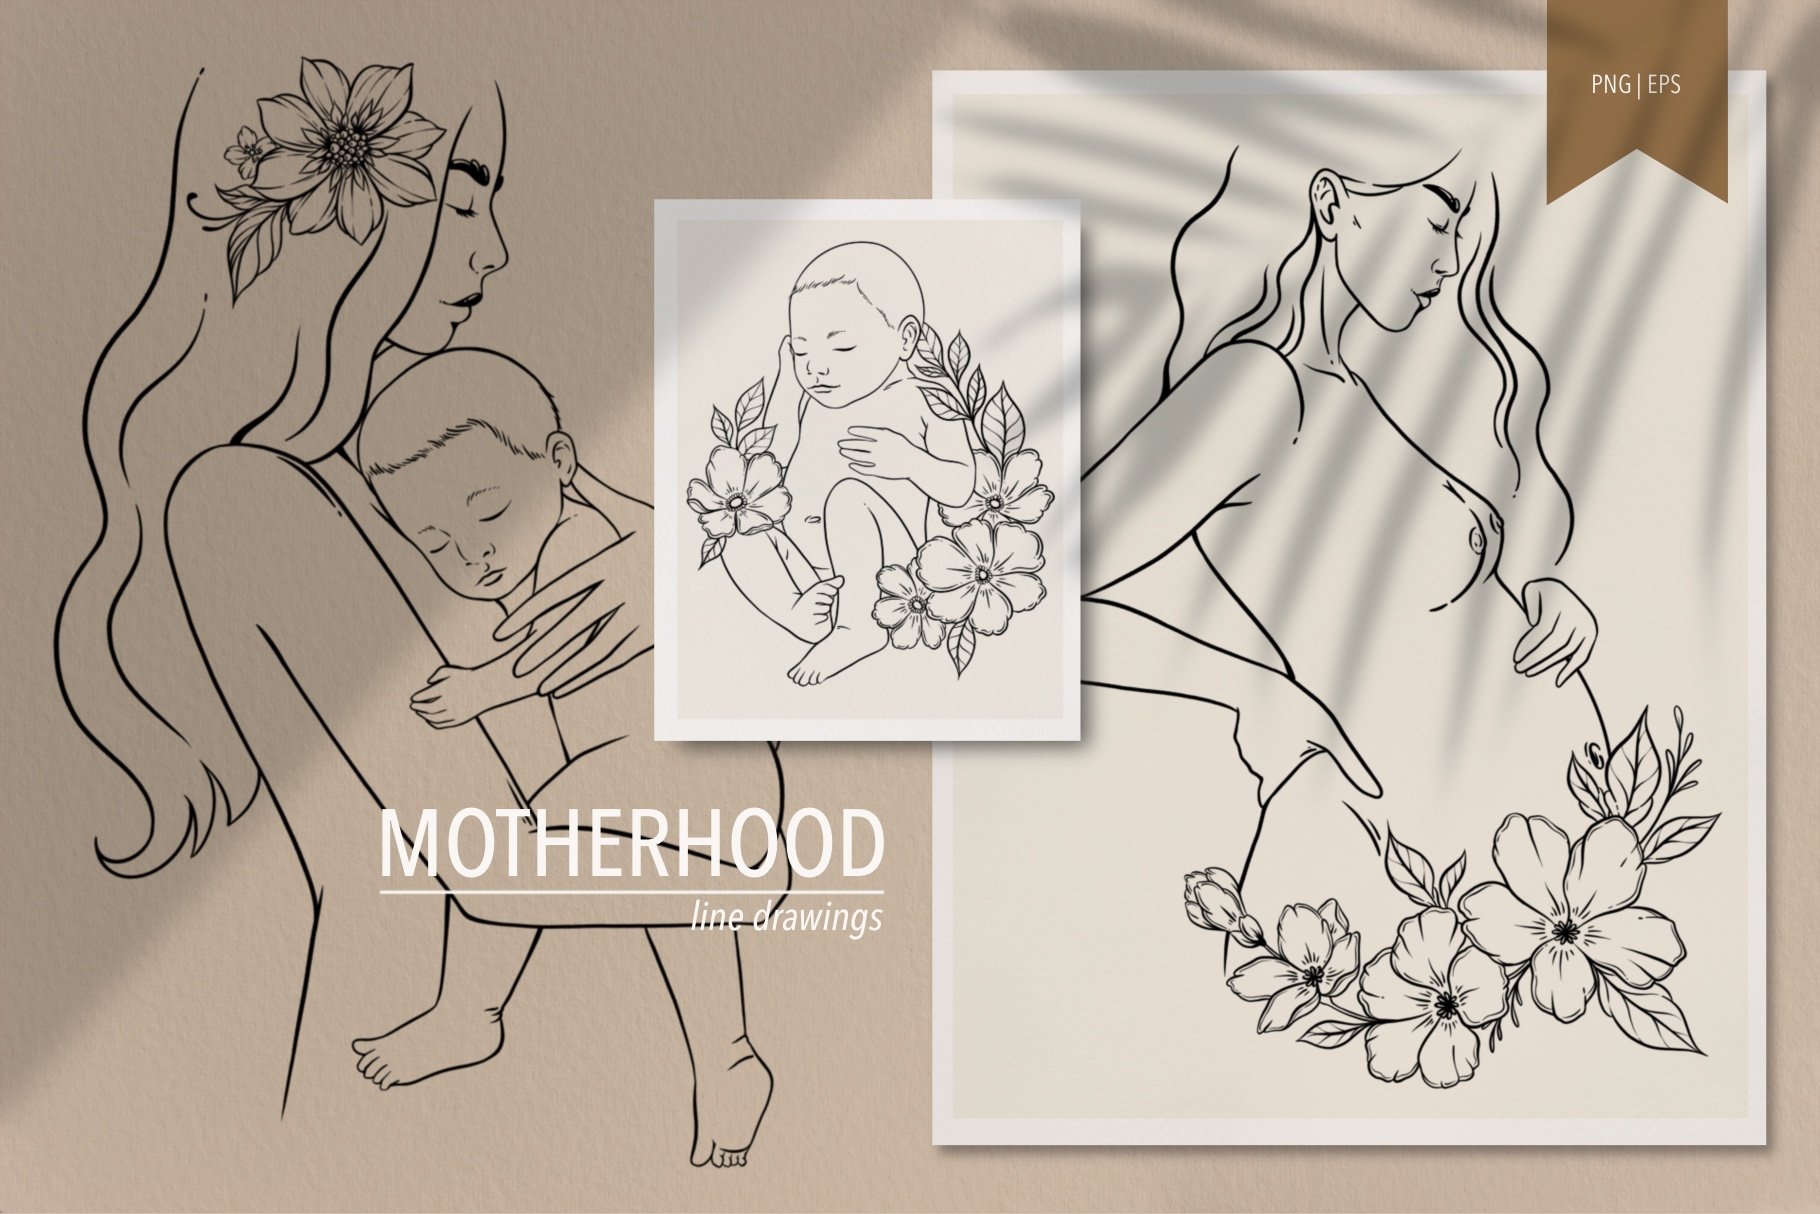 motherhood line art cover image.